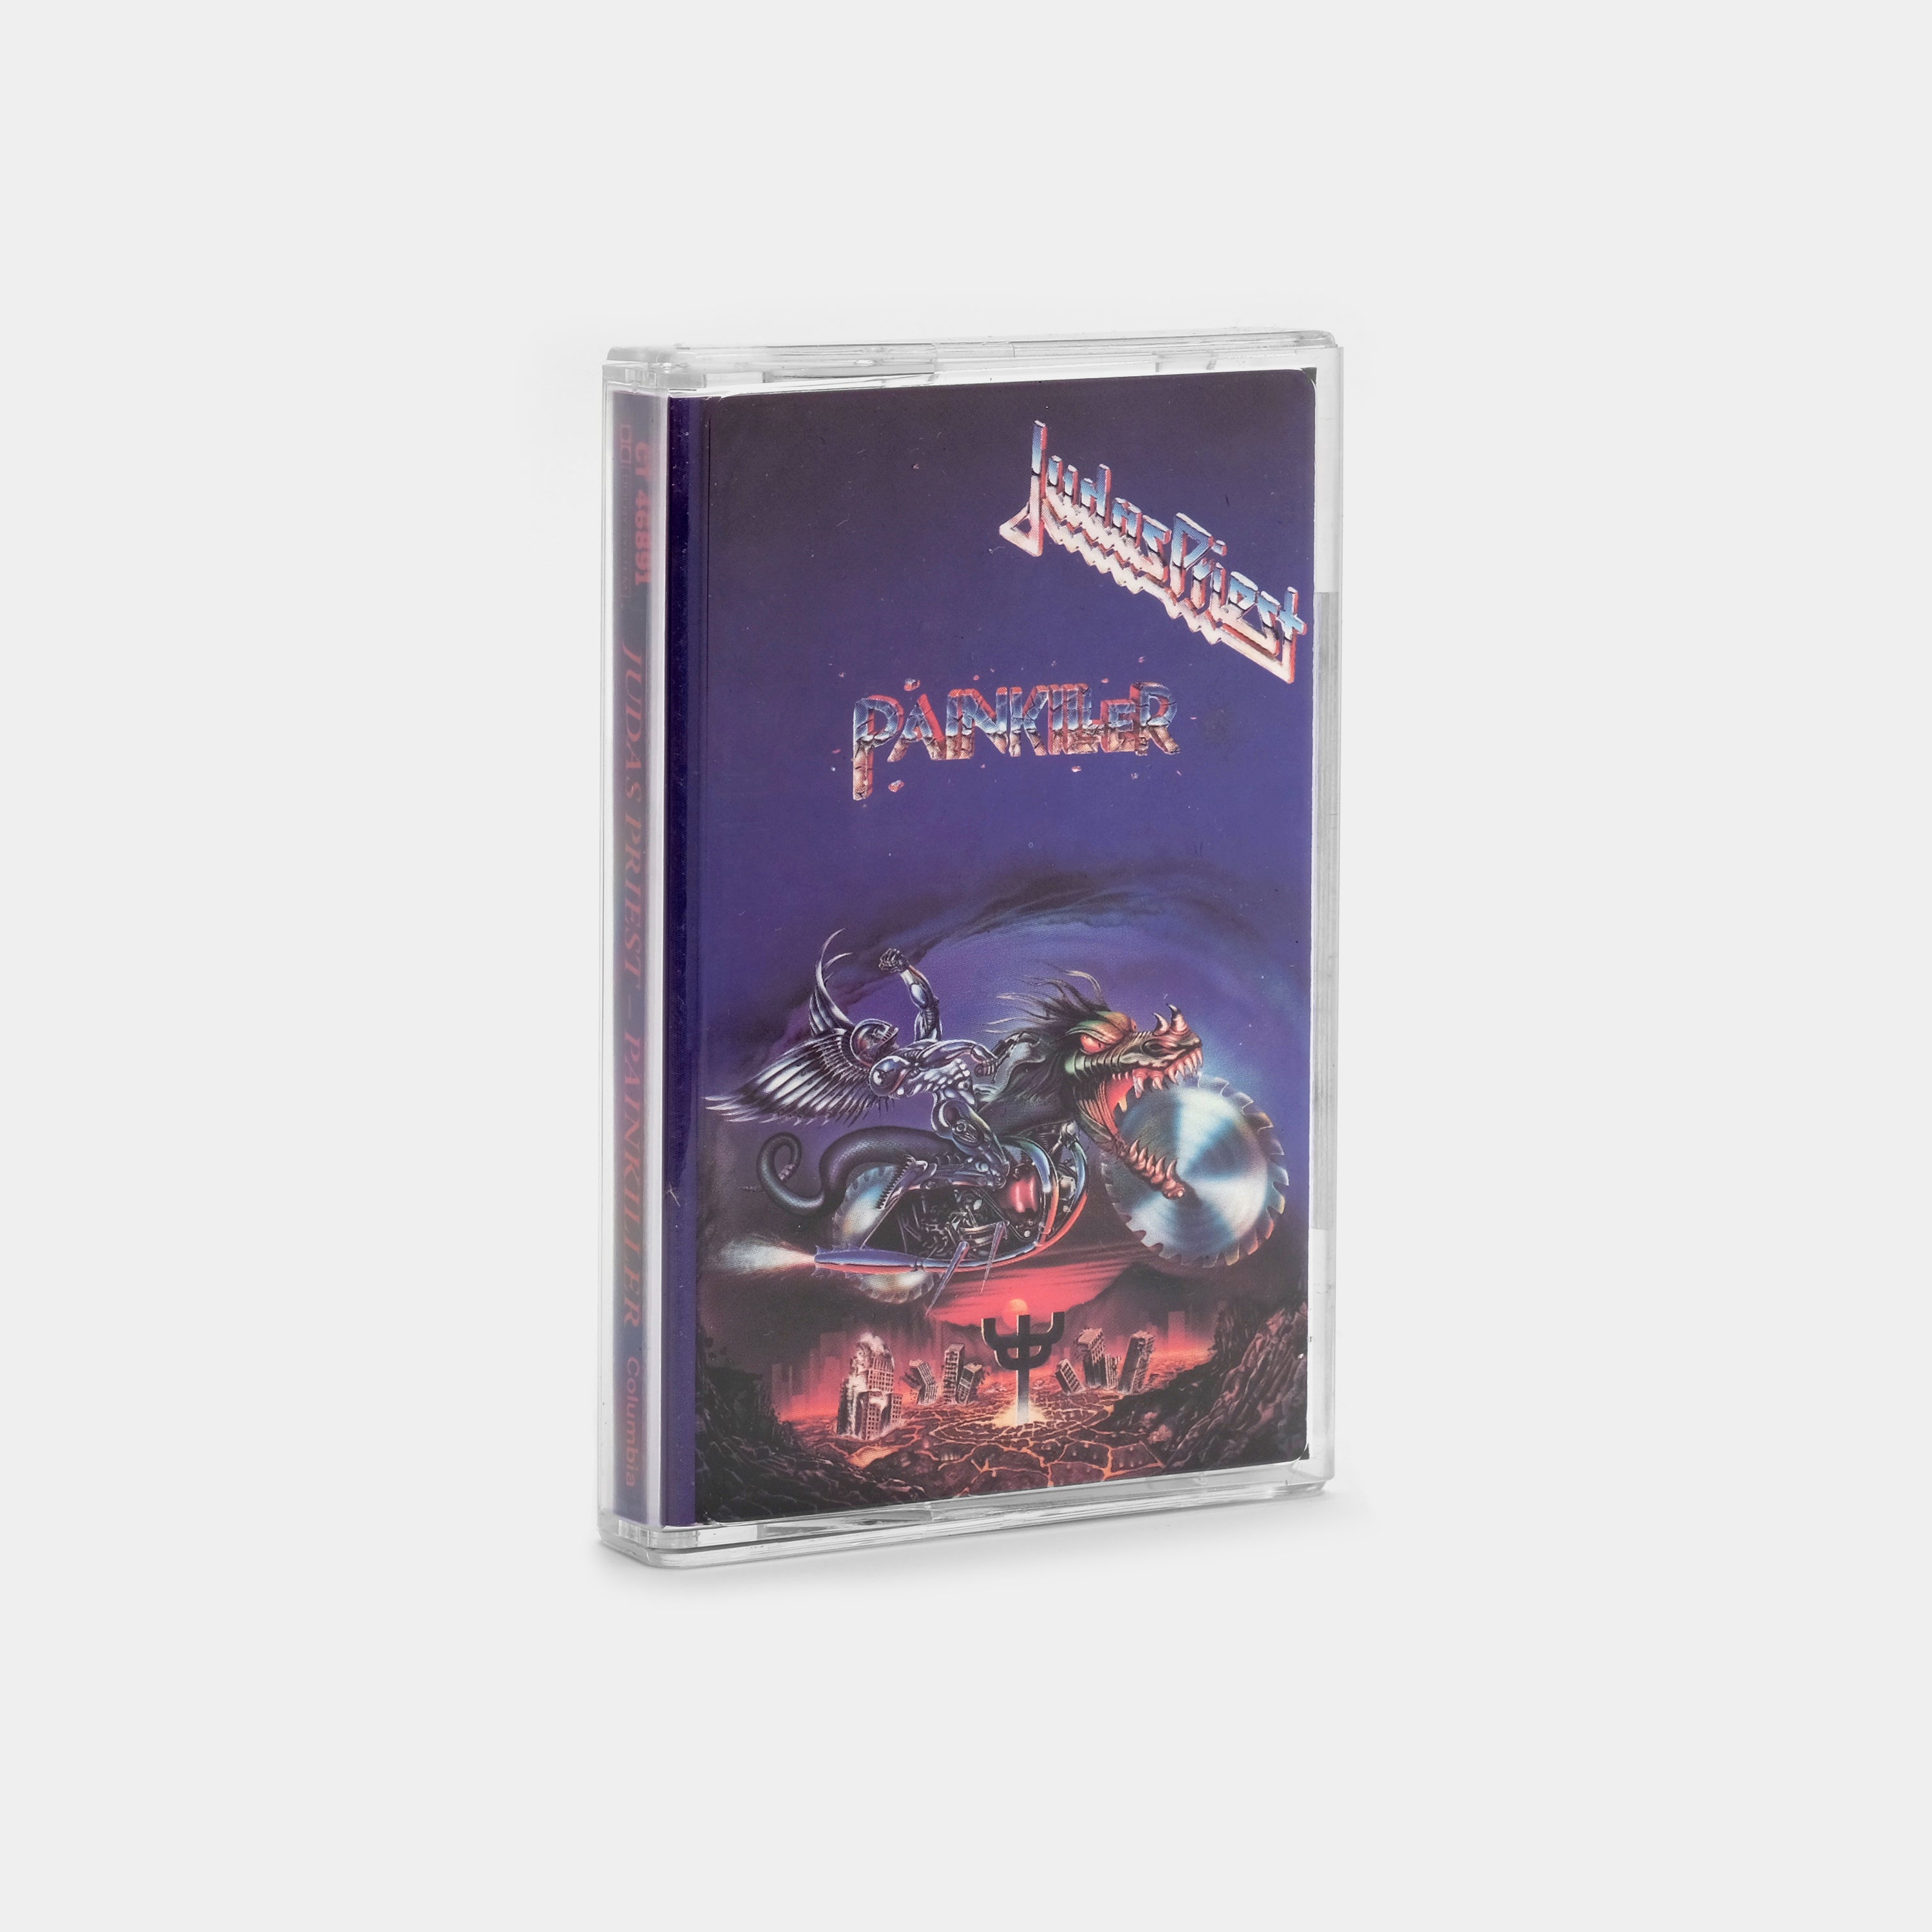 Judas Priest - Painkiller Cassette Tape